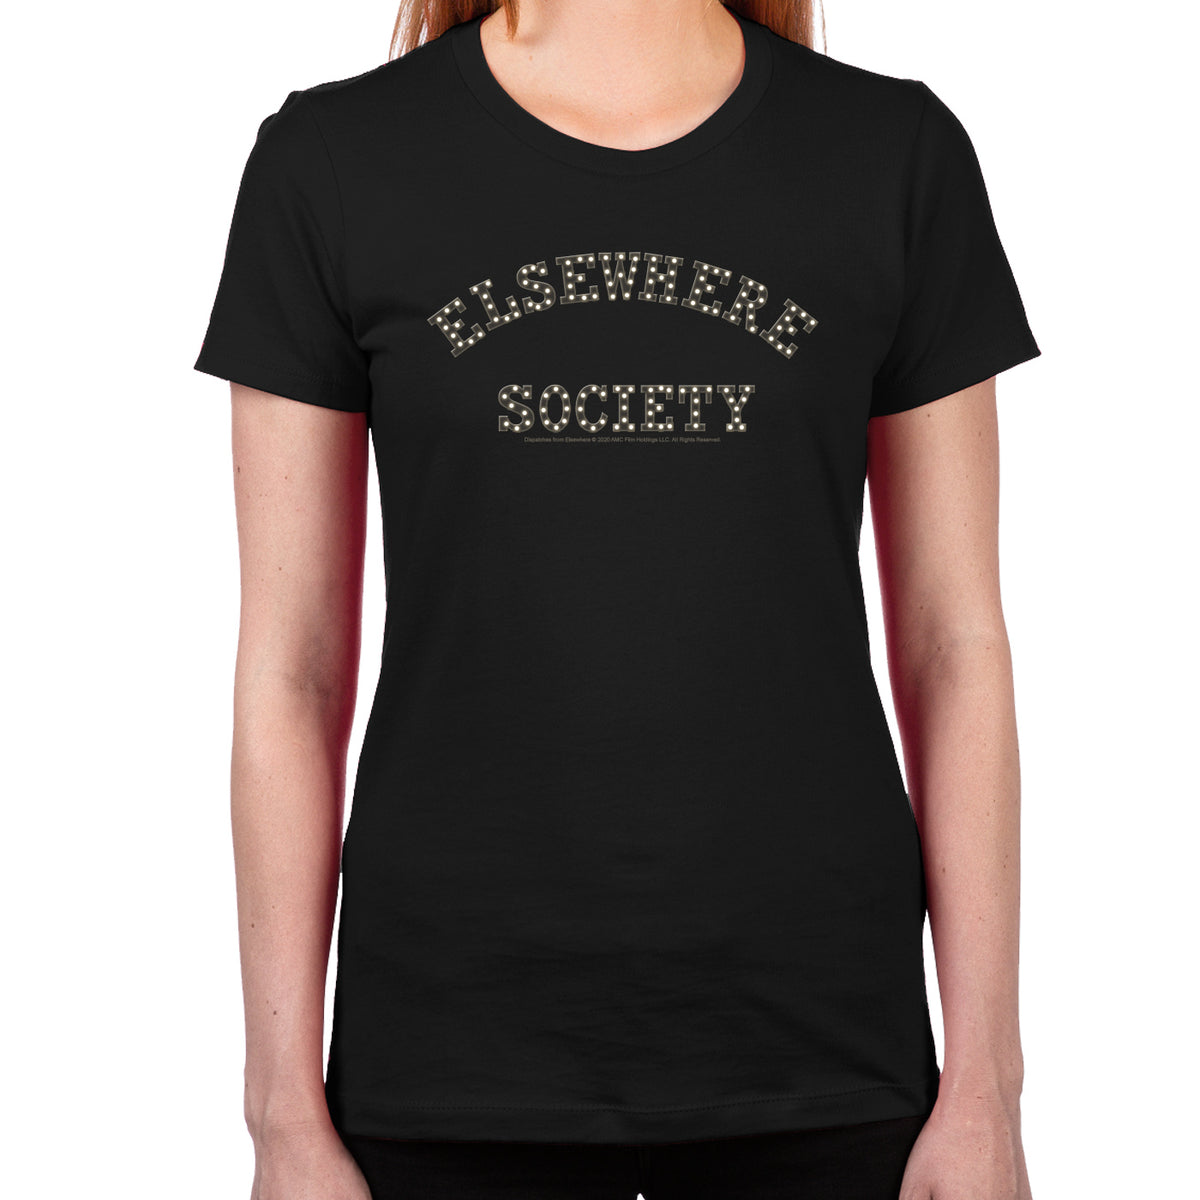 Elsewhere Society Women's T-Shirt